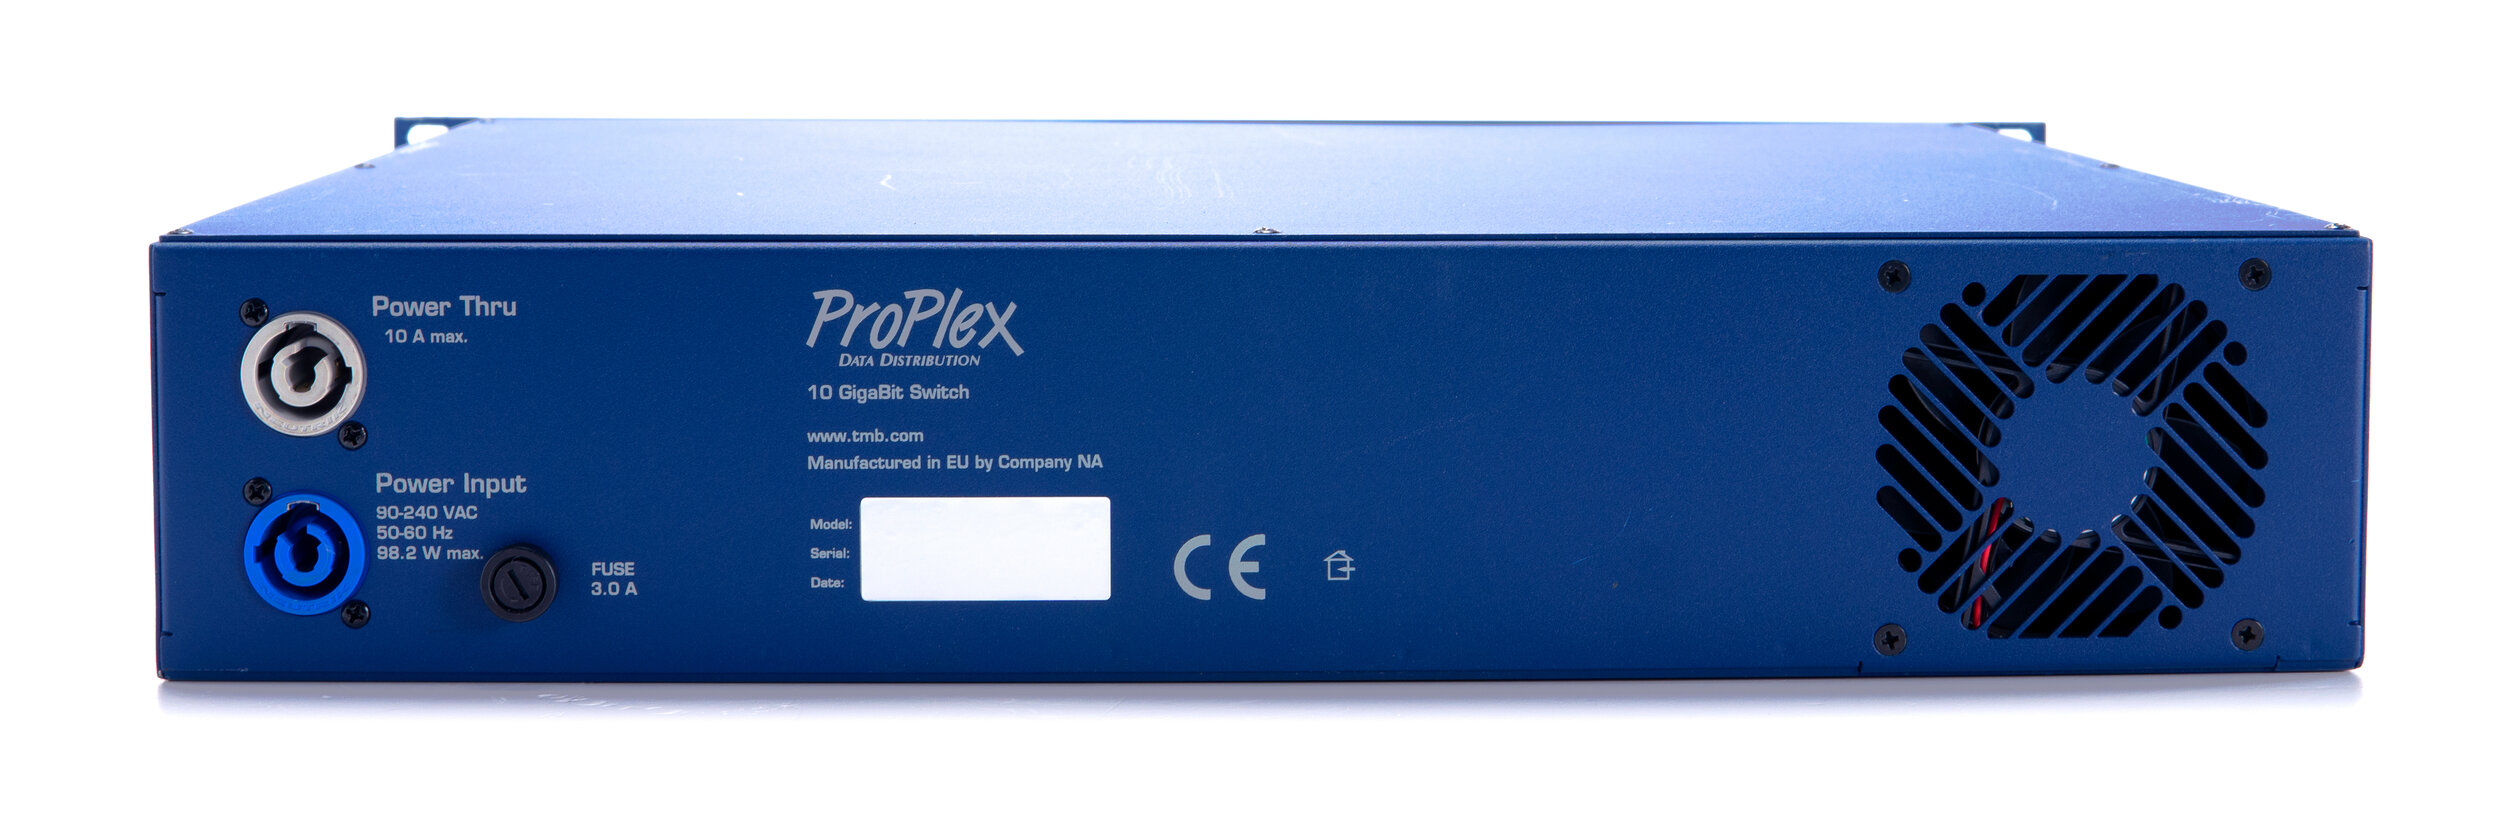 FLEX24-10G Switch, 10 Gigabit Ethernet Switch